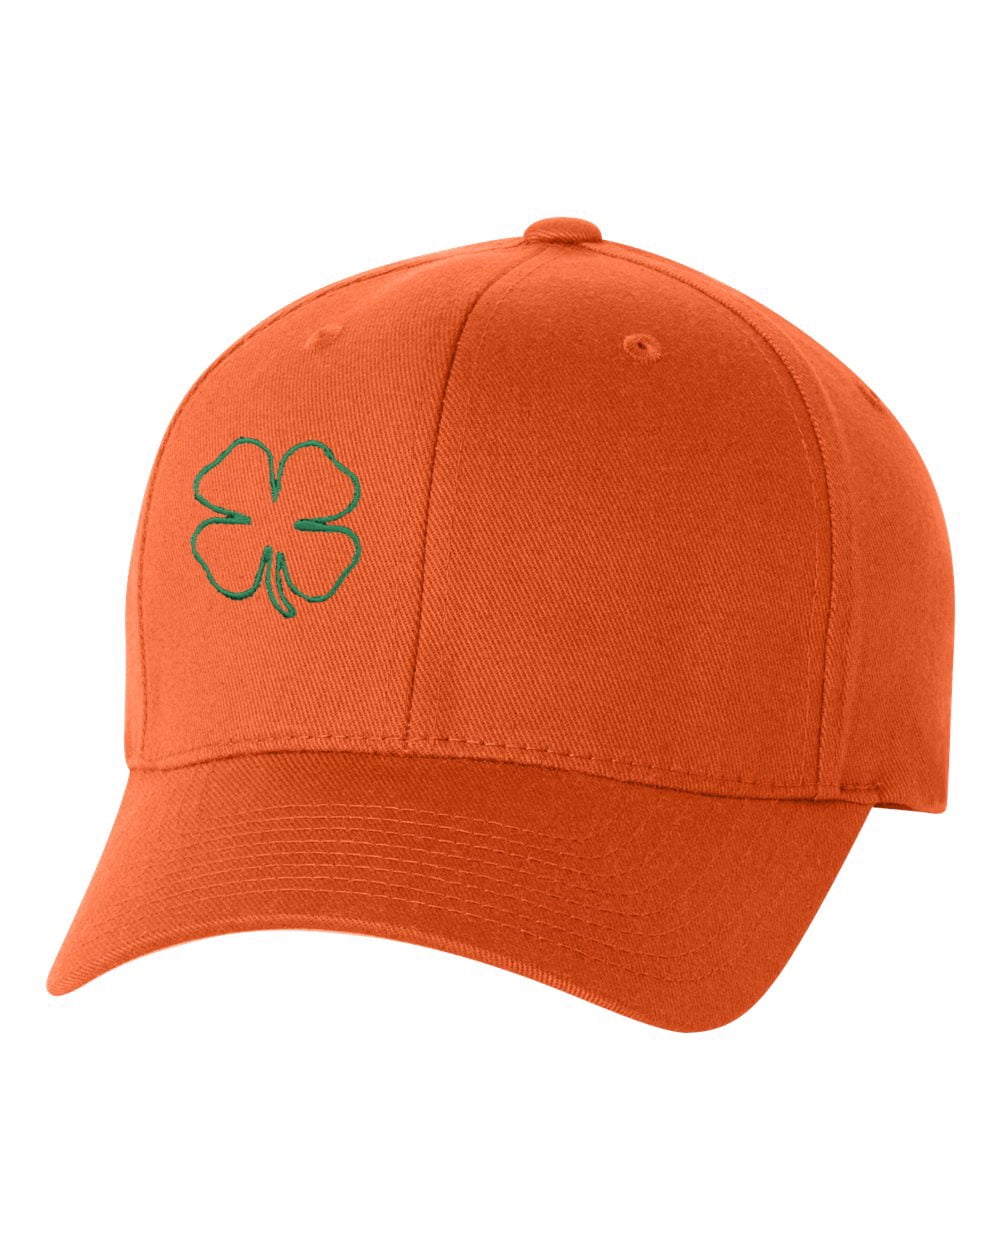 Irish Army Novelty Adjustable Hat Sun Hat Sandwich Baseball Cap Hats for Unisex